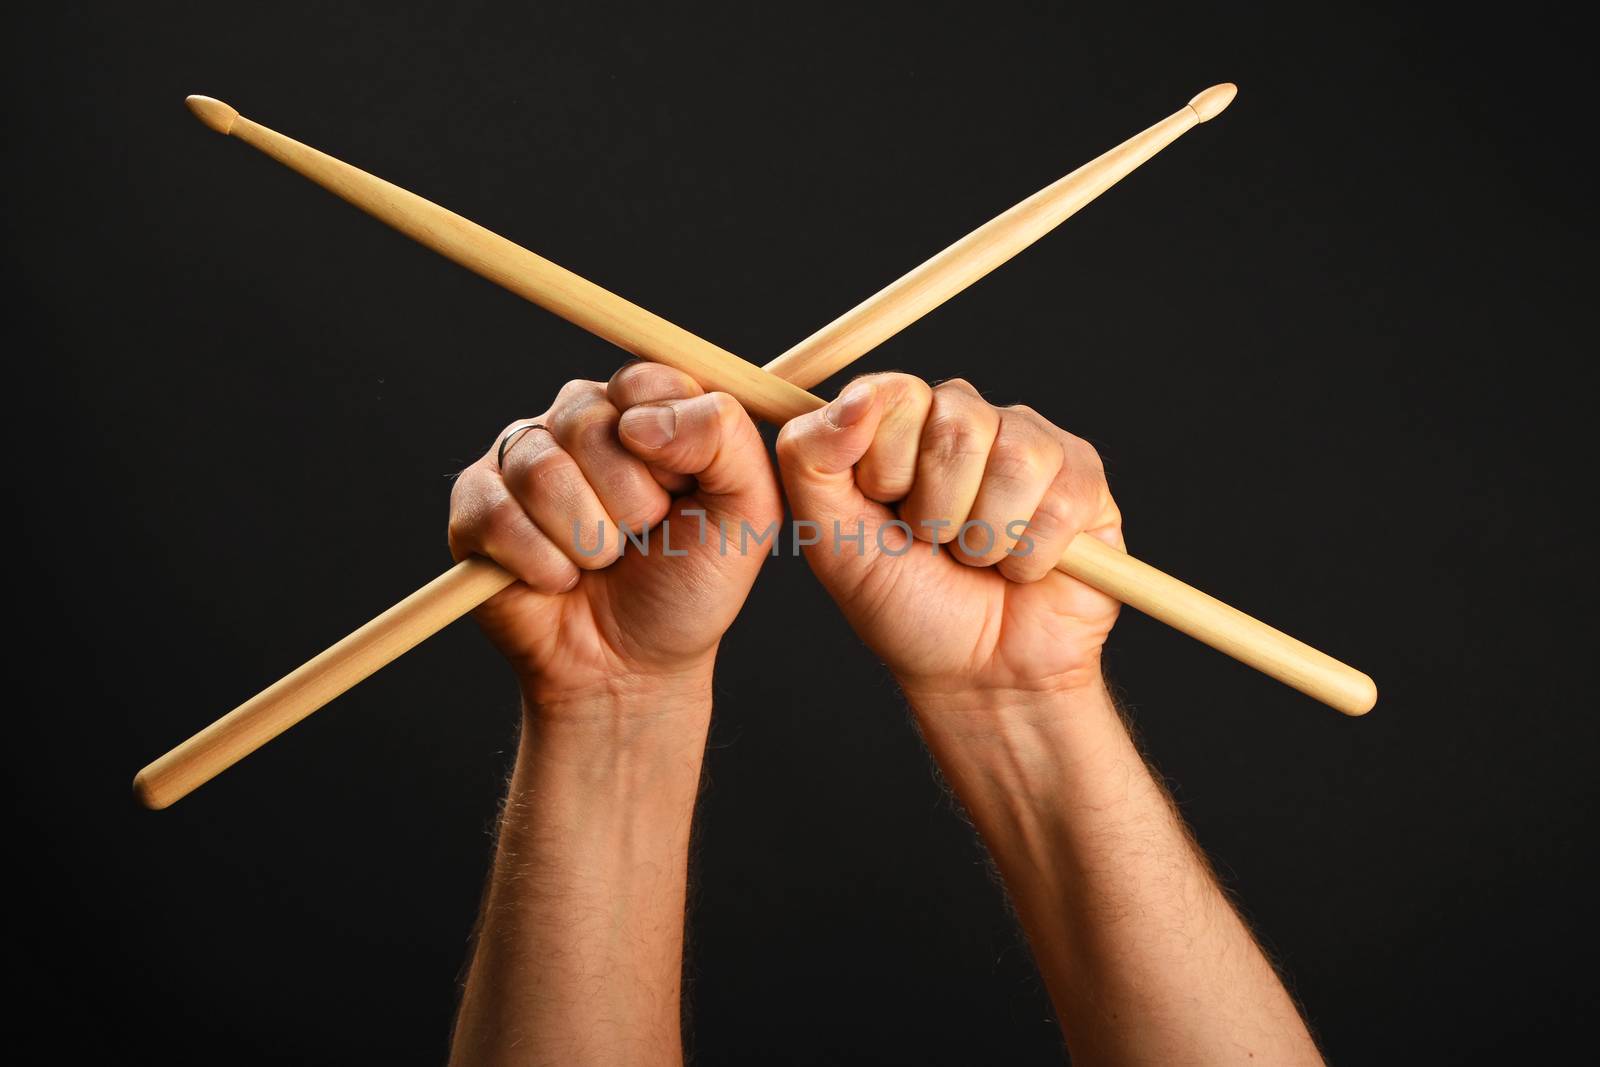 Two man hands holding crossed wooden drumsticks over black background